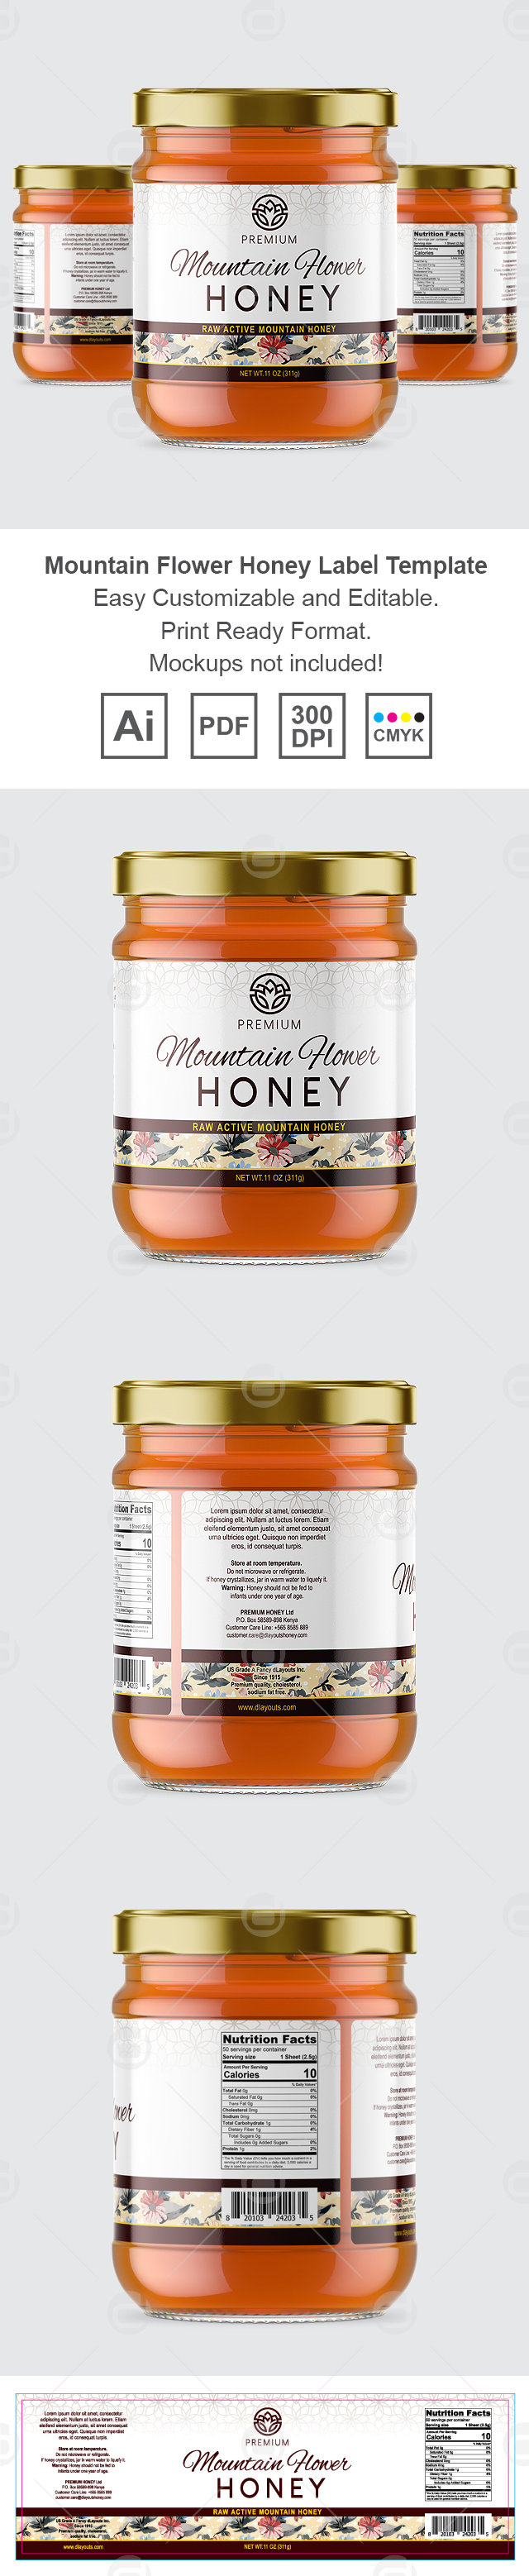 Mountain Flower Honey Label Template